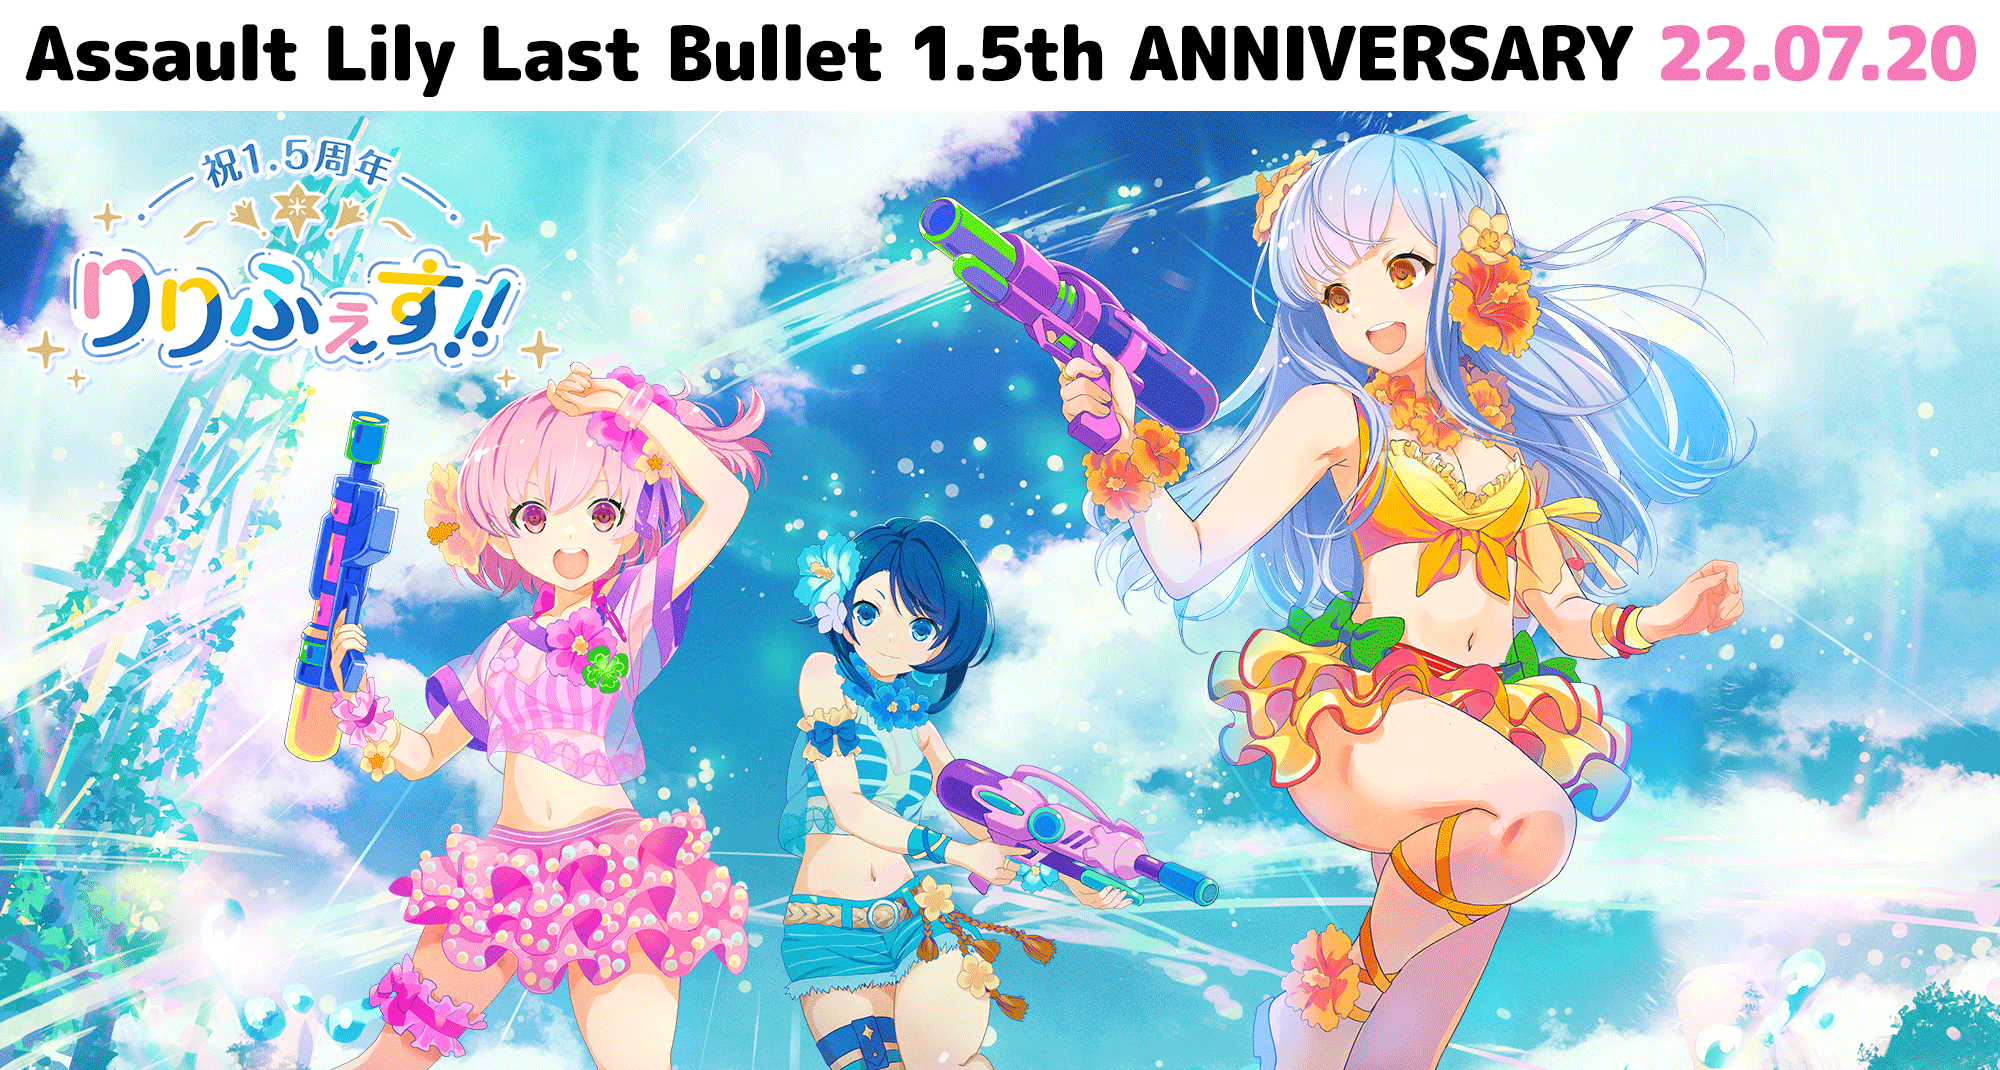 Assault Lily Last Bullet 1.5th ANNIVERSARY 22.07.20